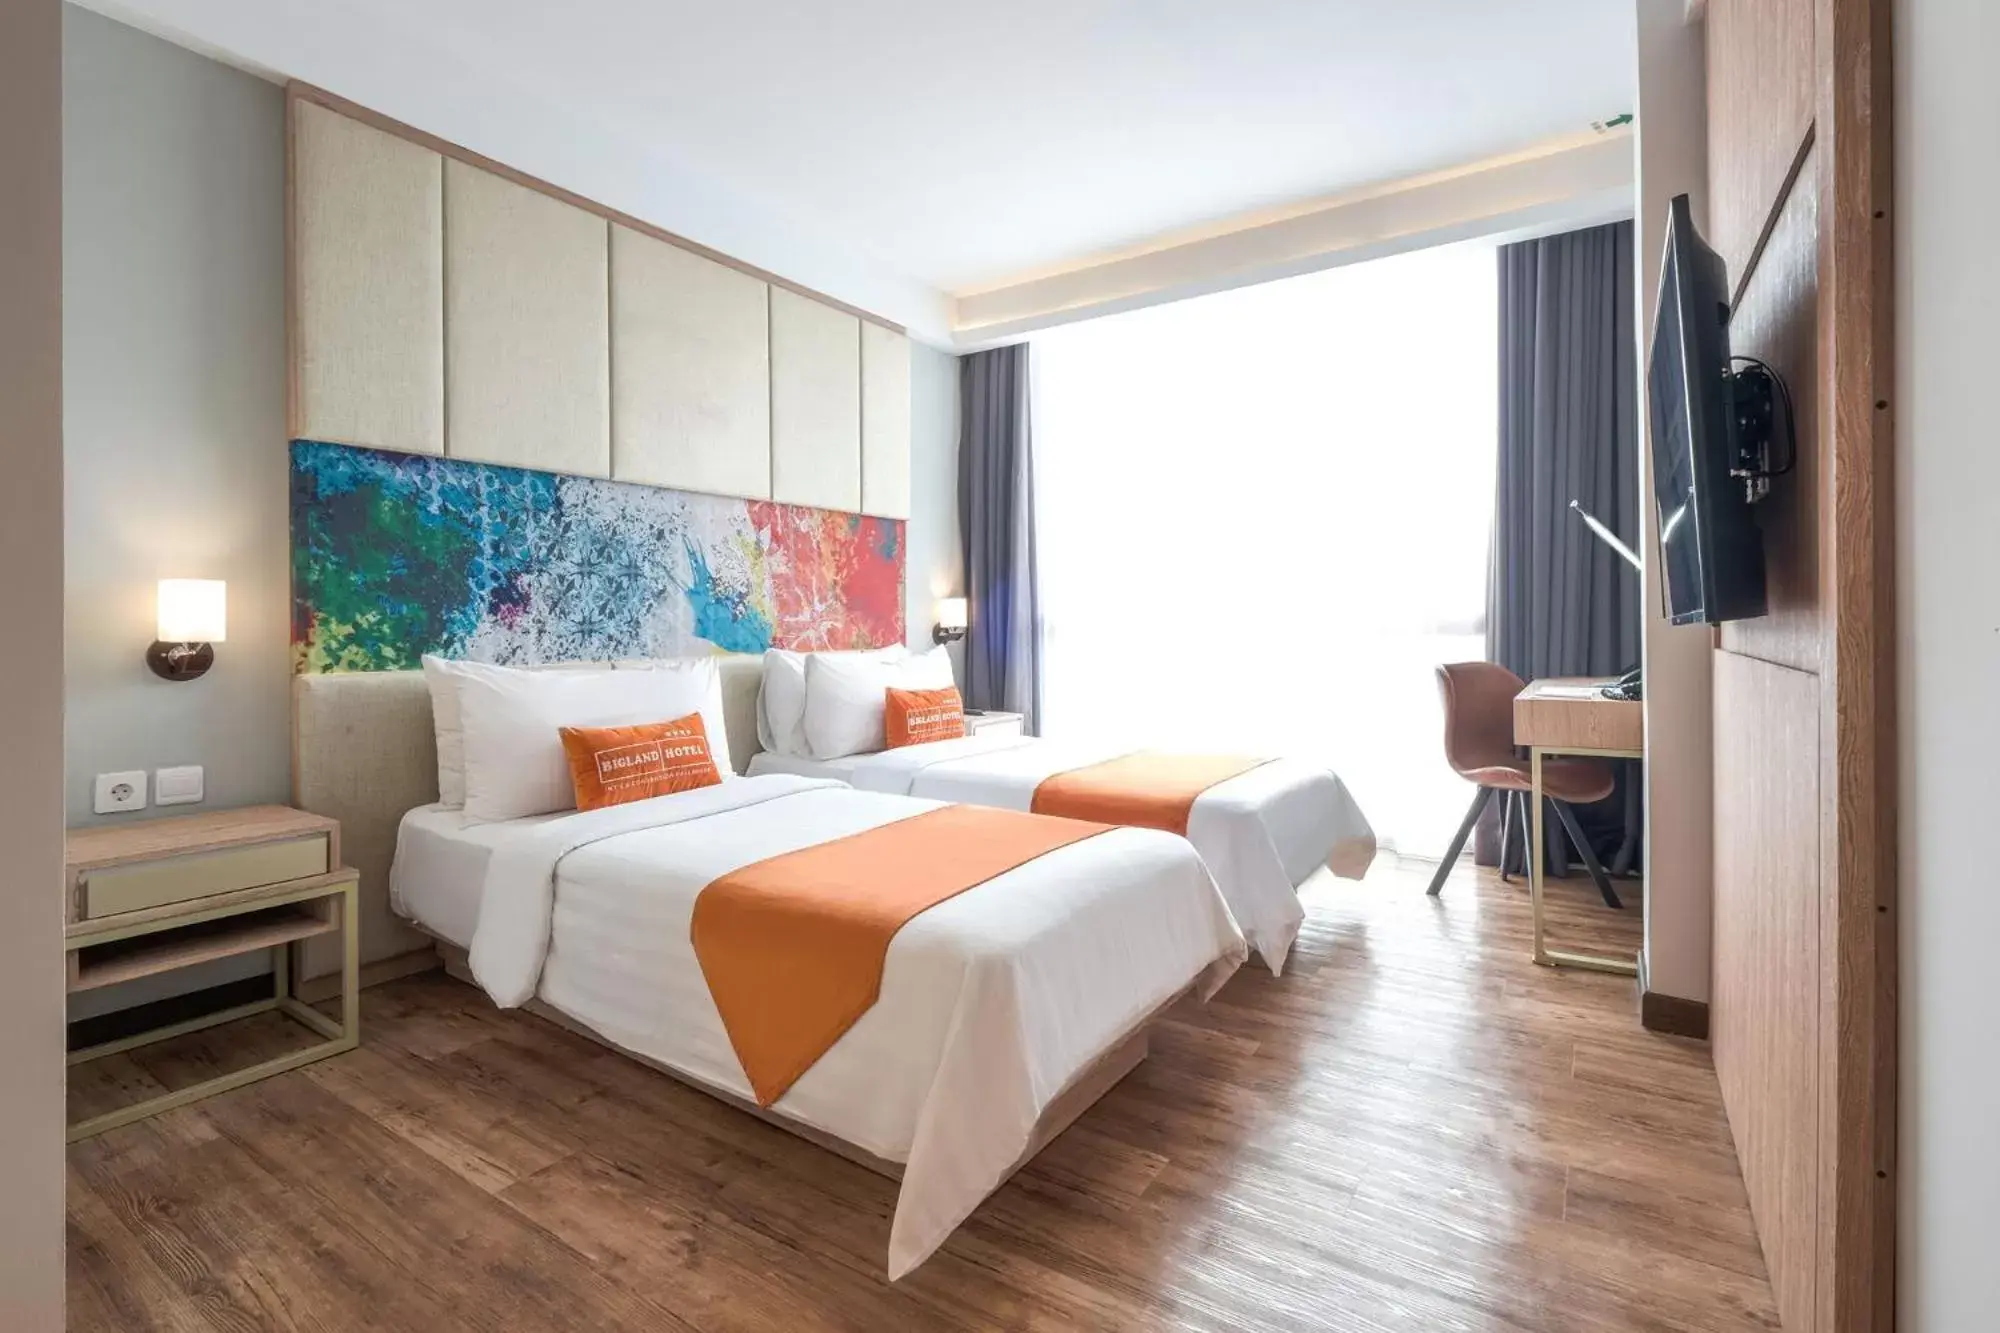 Bedroom, Bed in Bigland Hotel Bogor